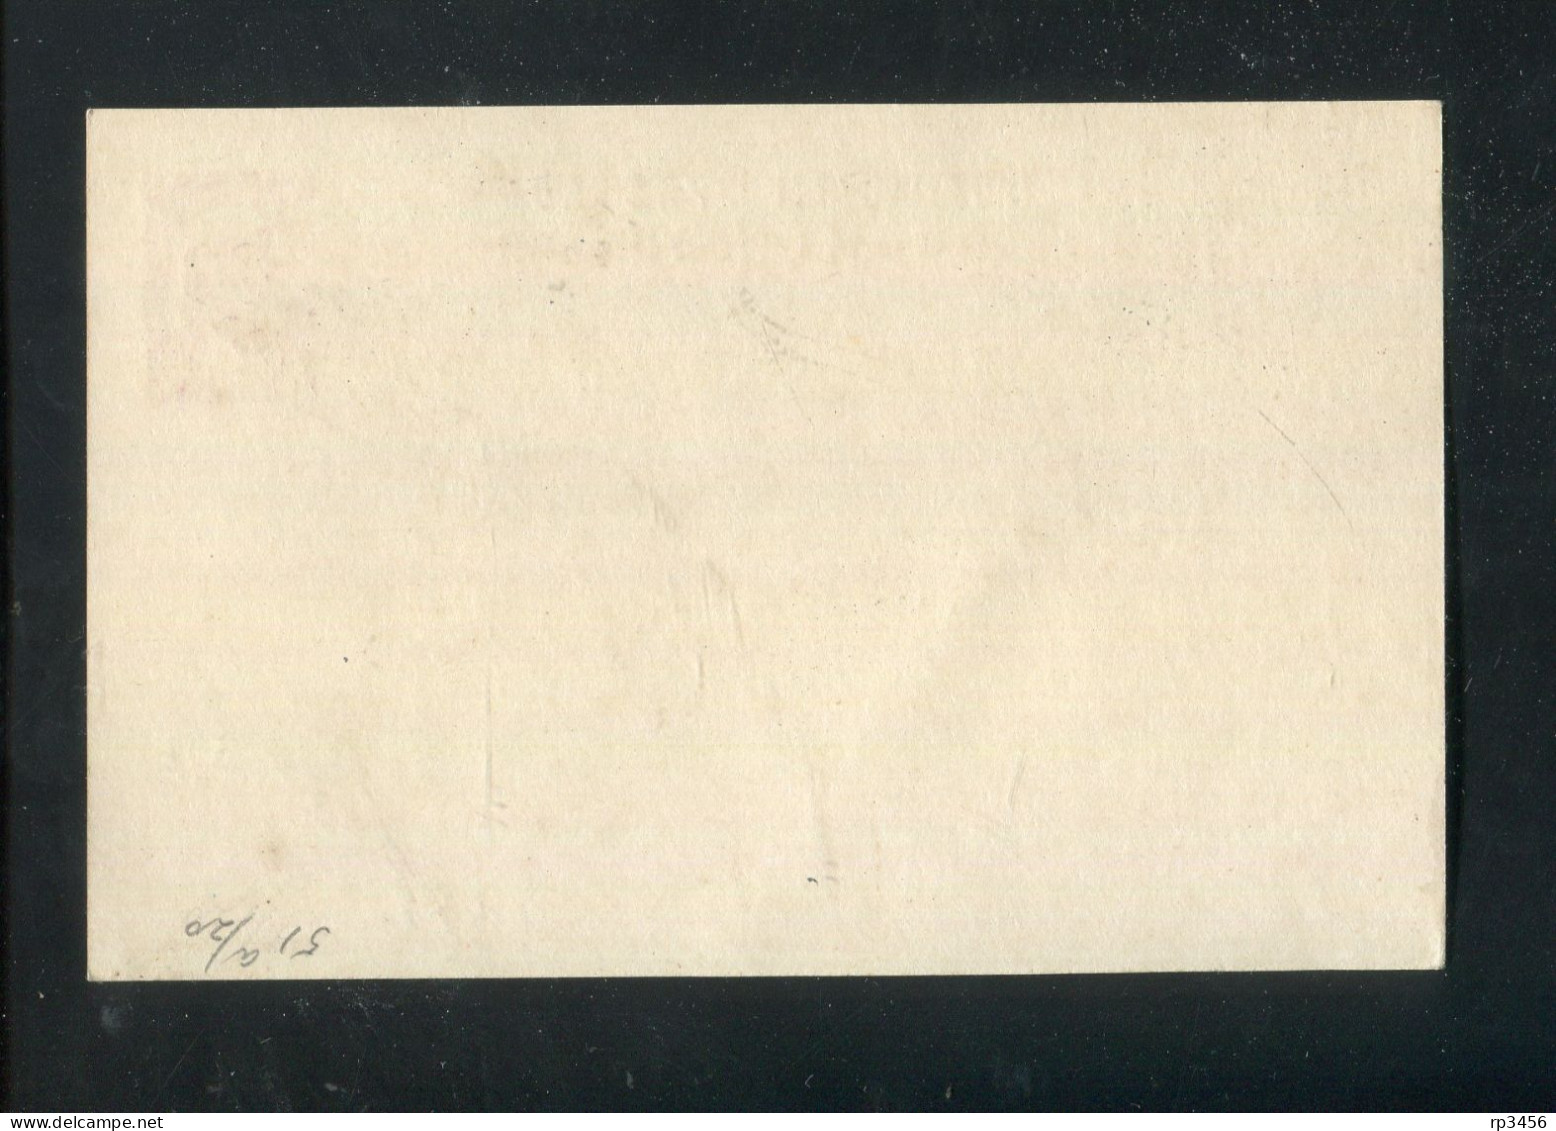 "FINNLAND" 1921, Aushilfs-Postkarte Mi. P 51a ** (R1017) - Entiers Postaux